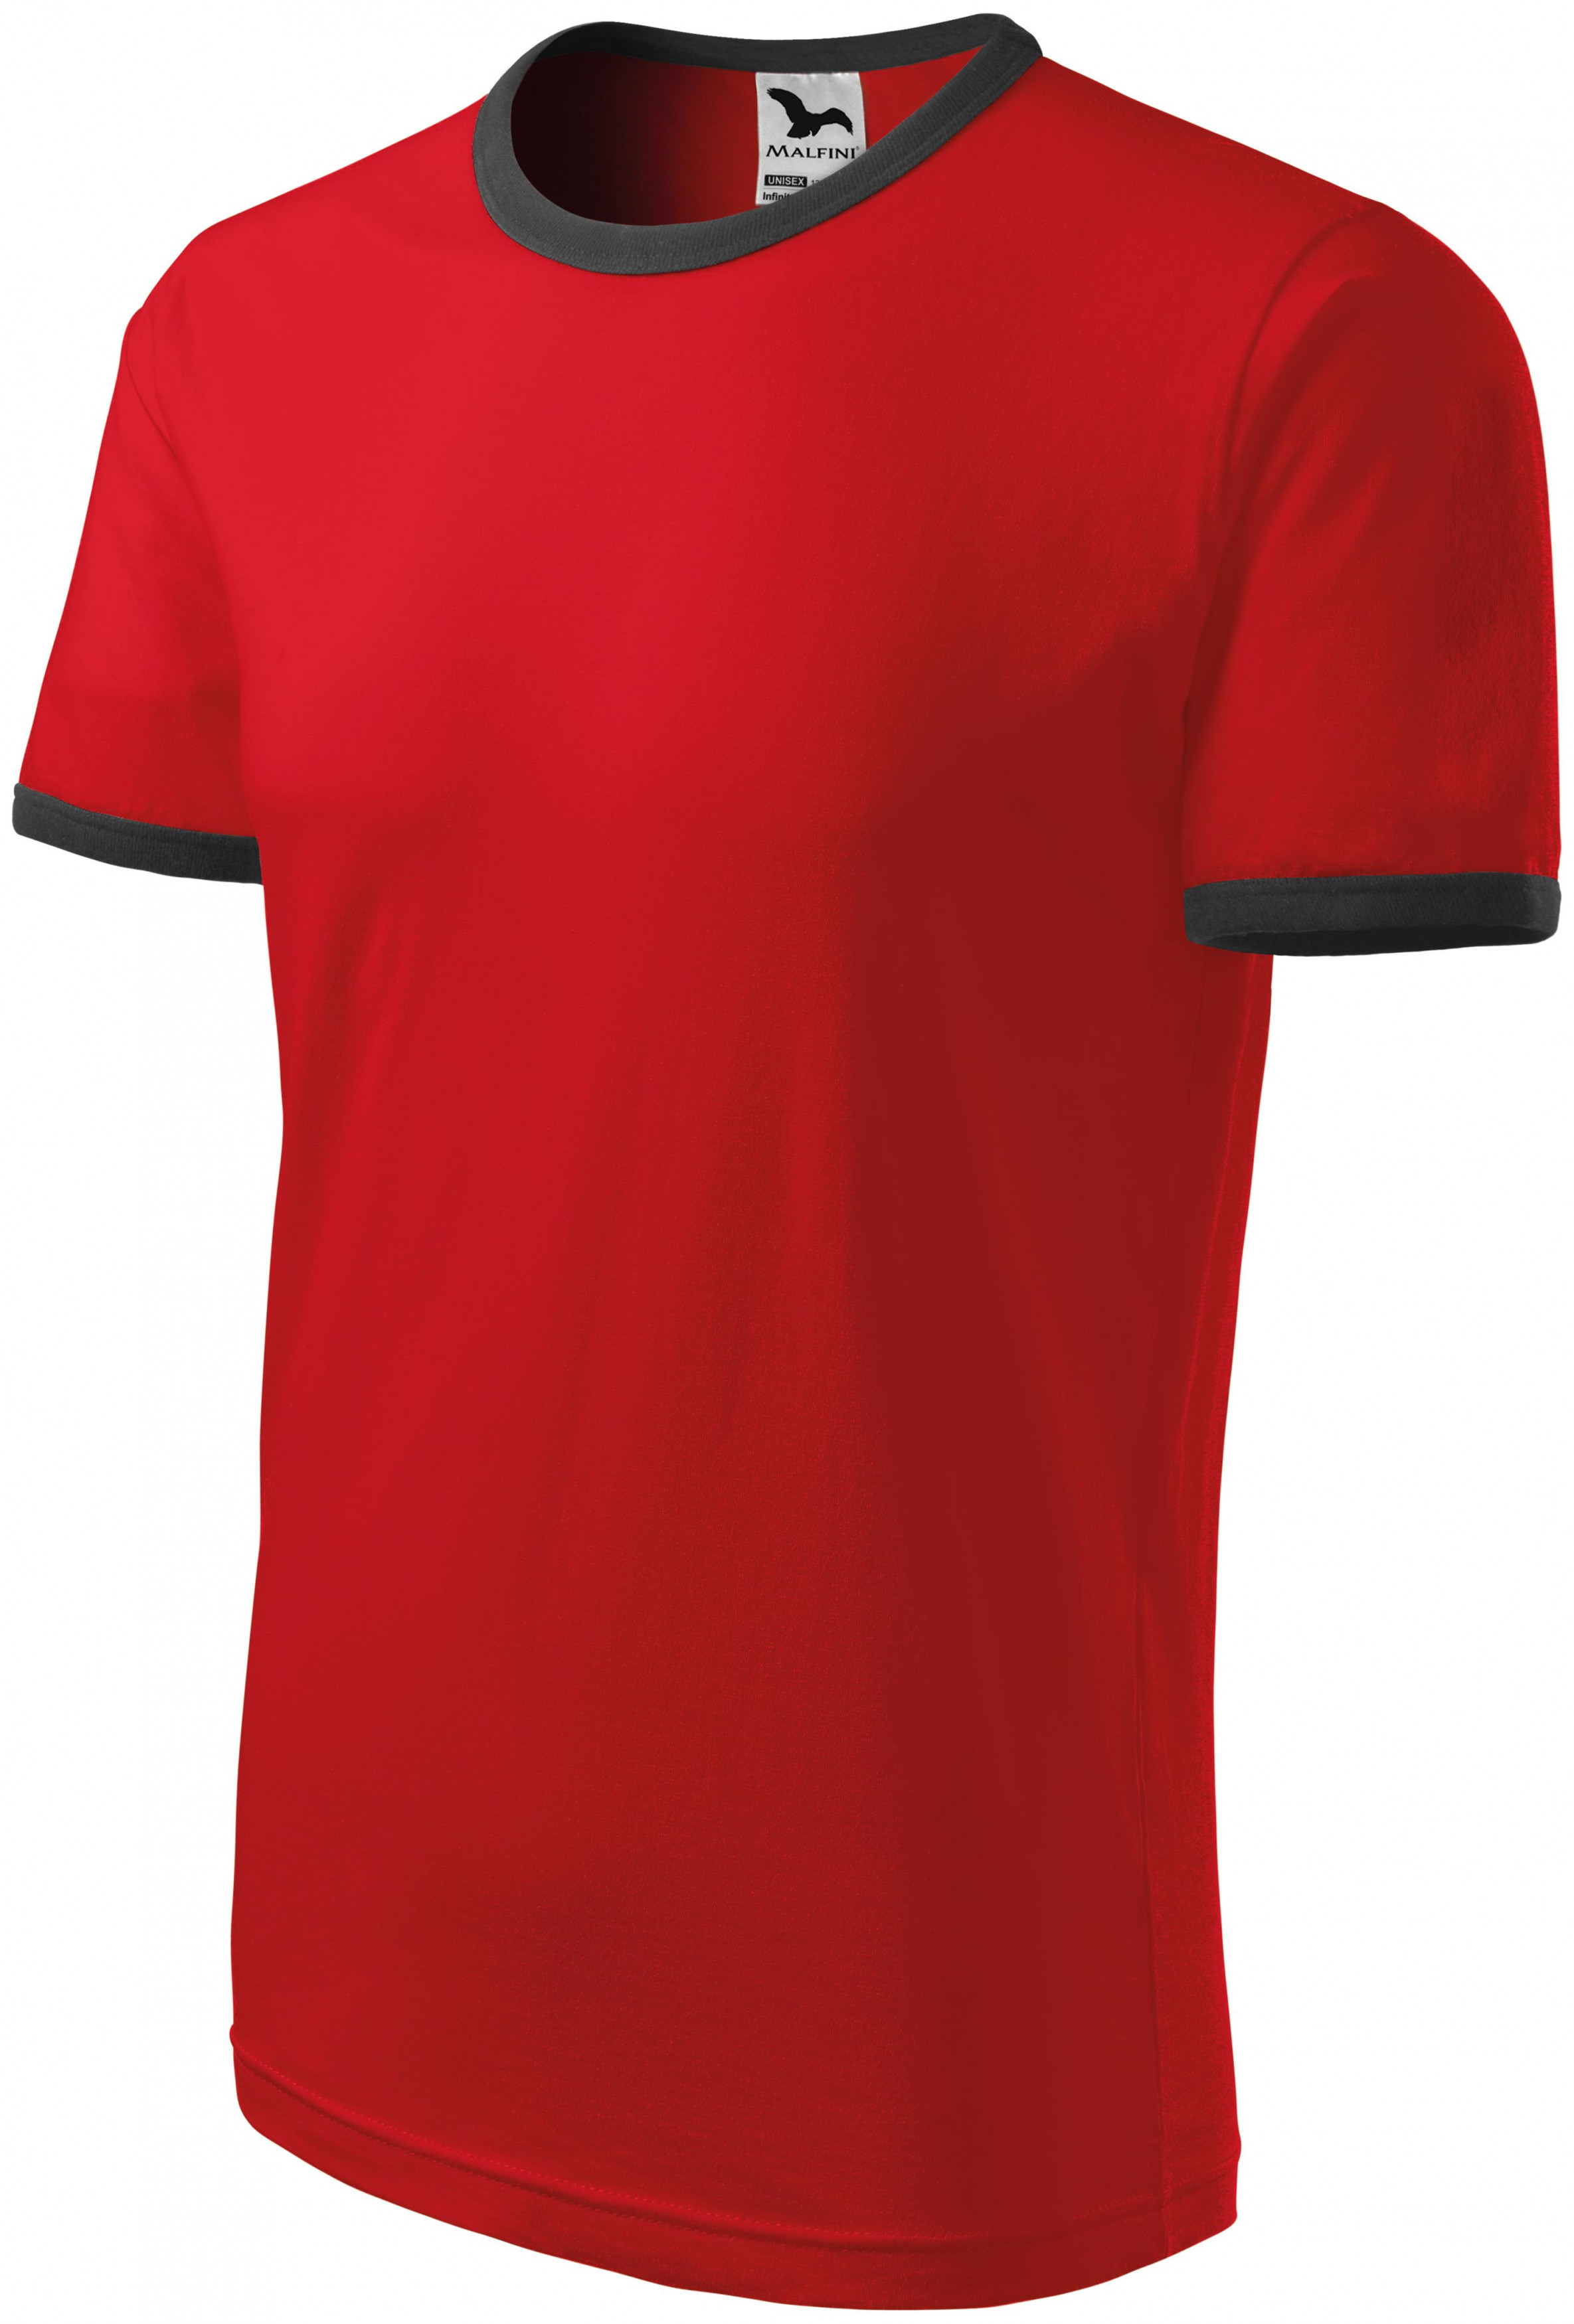 Unisex tričko kontrastné, červená, 2XL